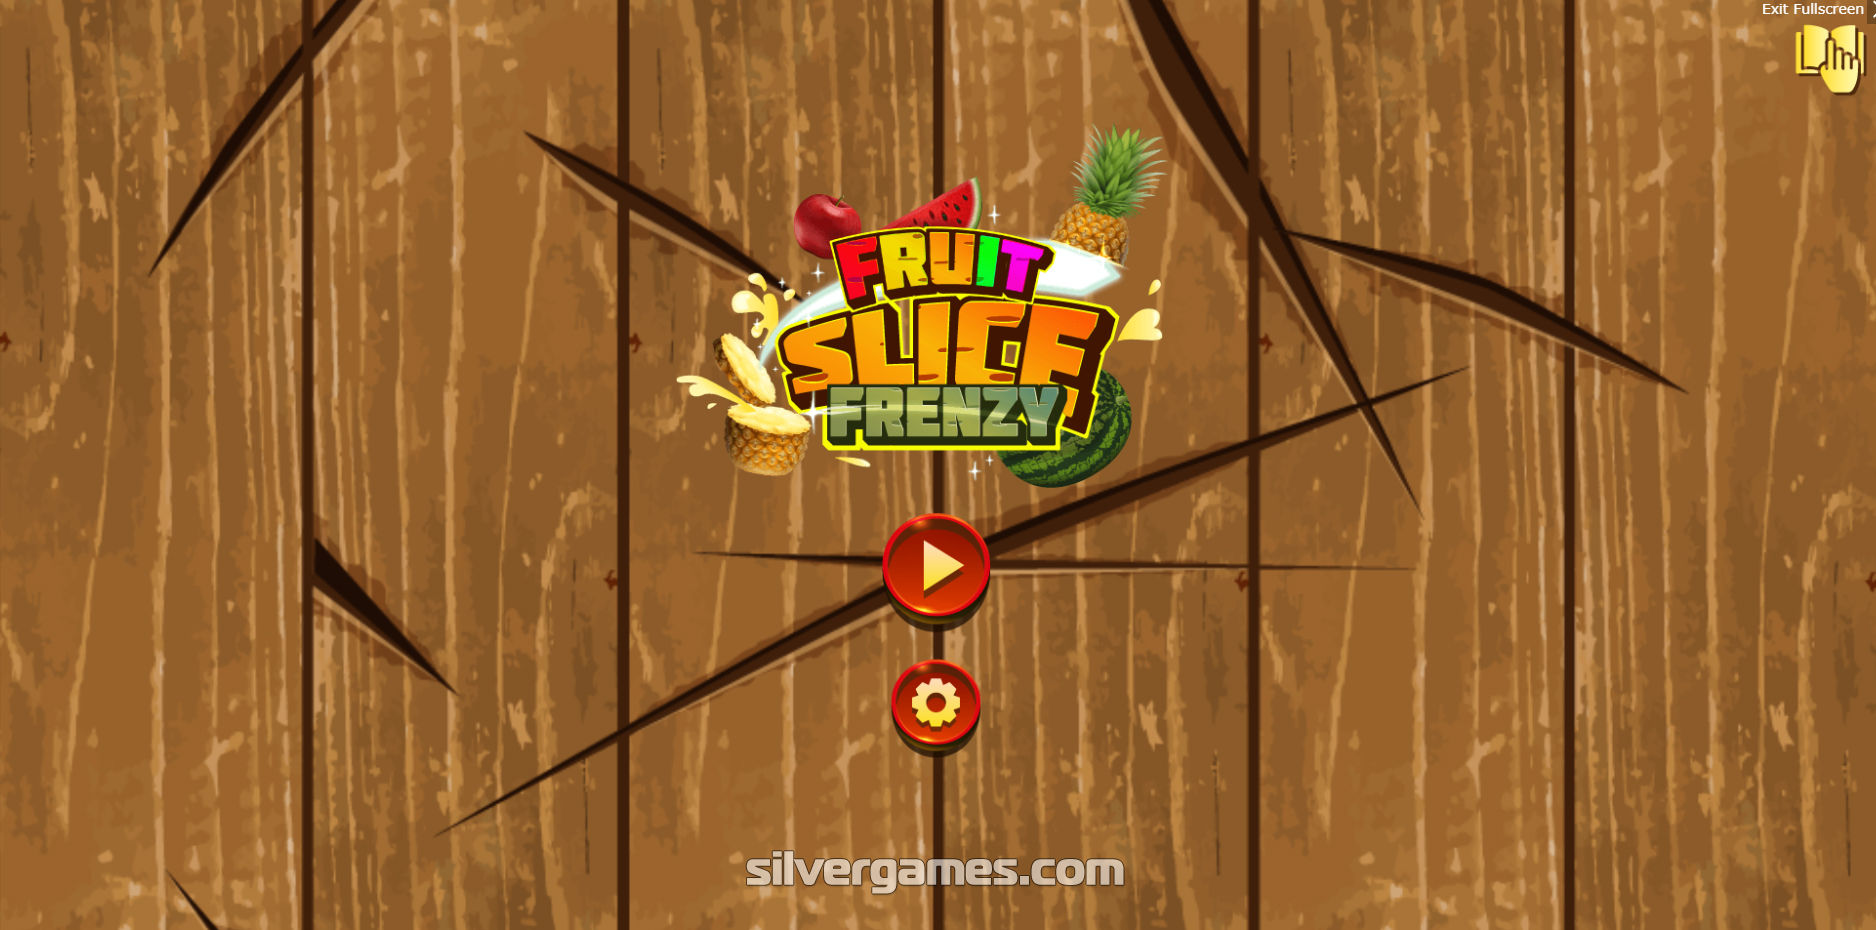 https://a.silvergames.com/screenshots/fruit-slice-frenzy/1_menu.jpg